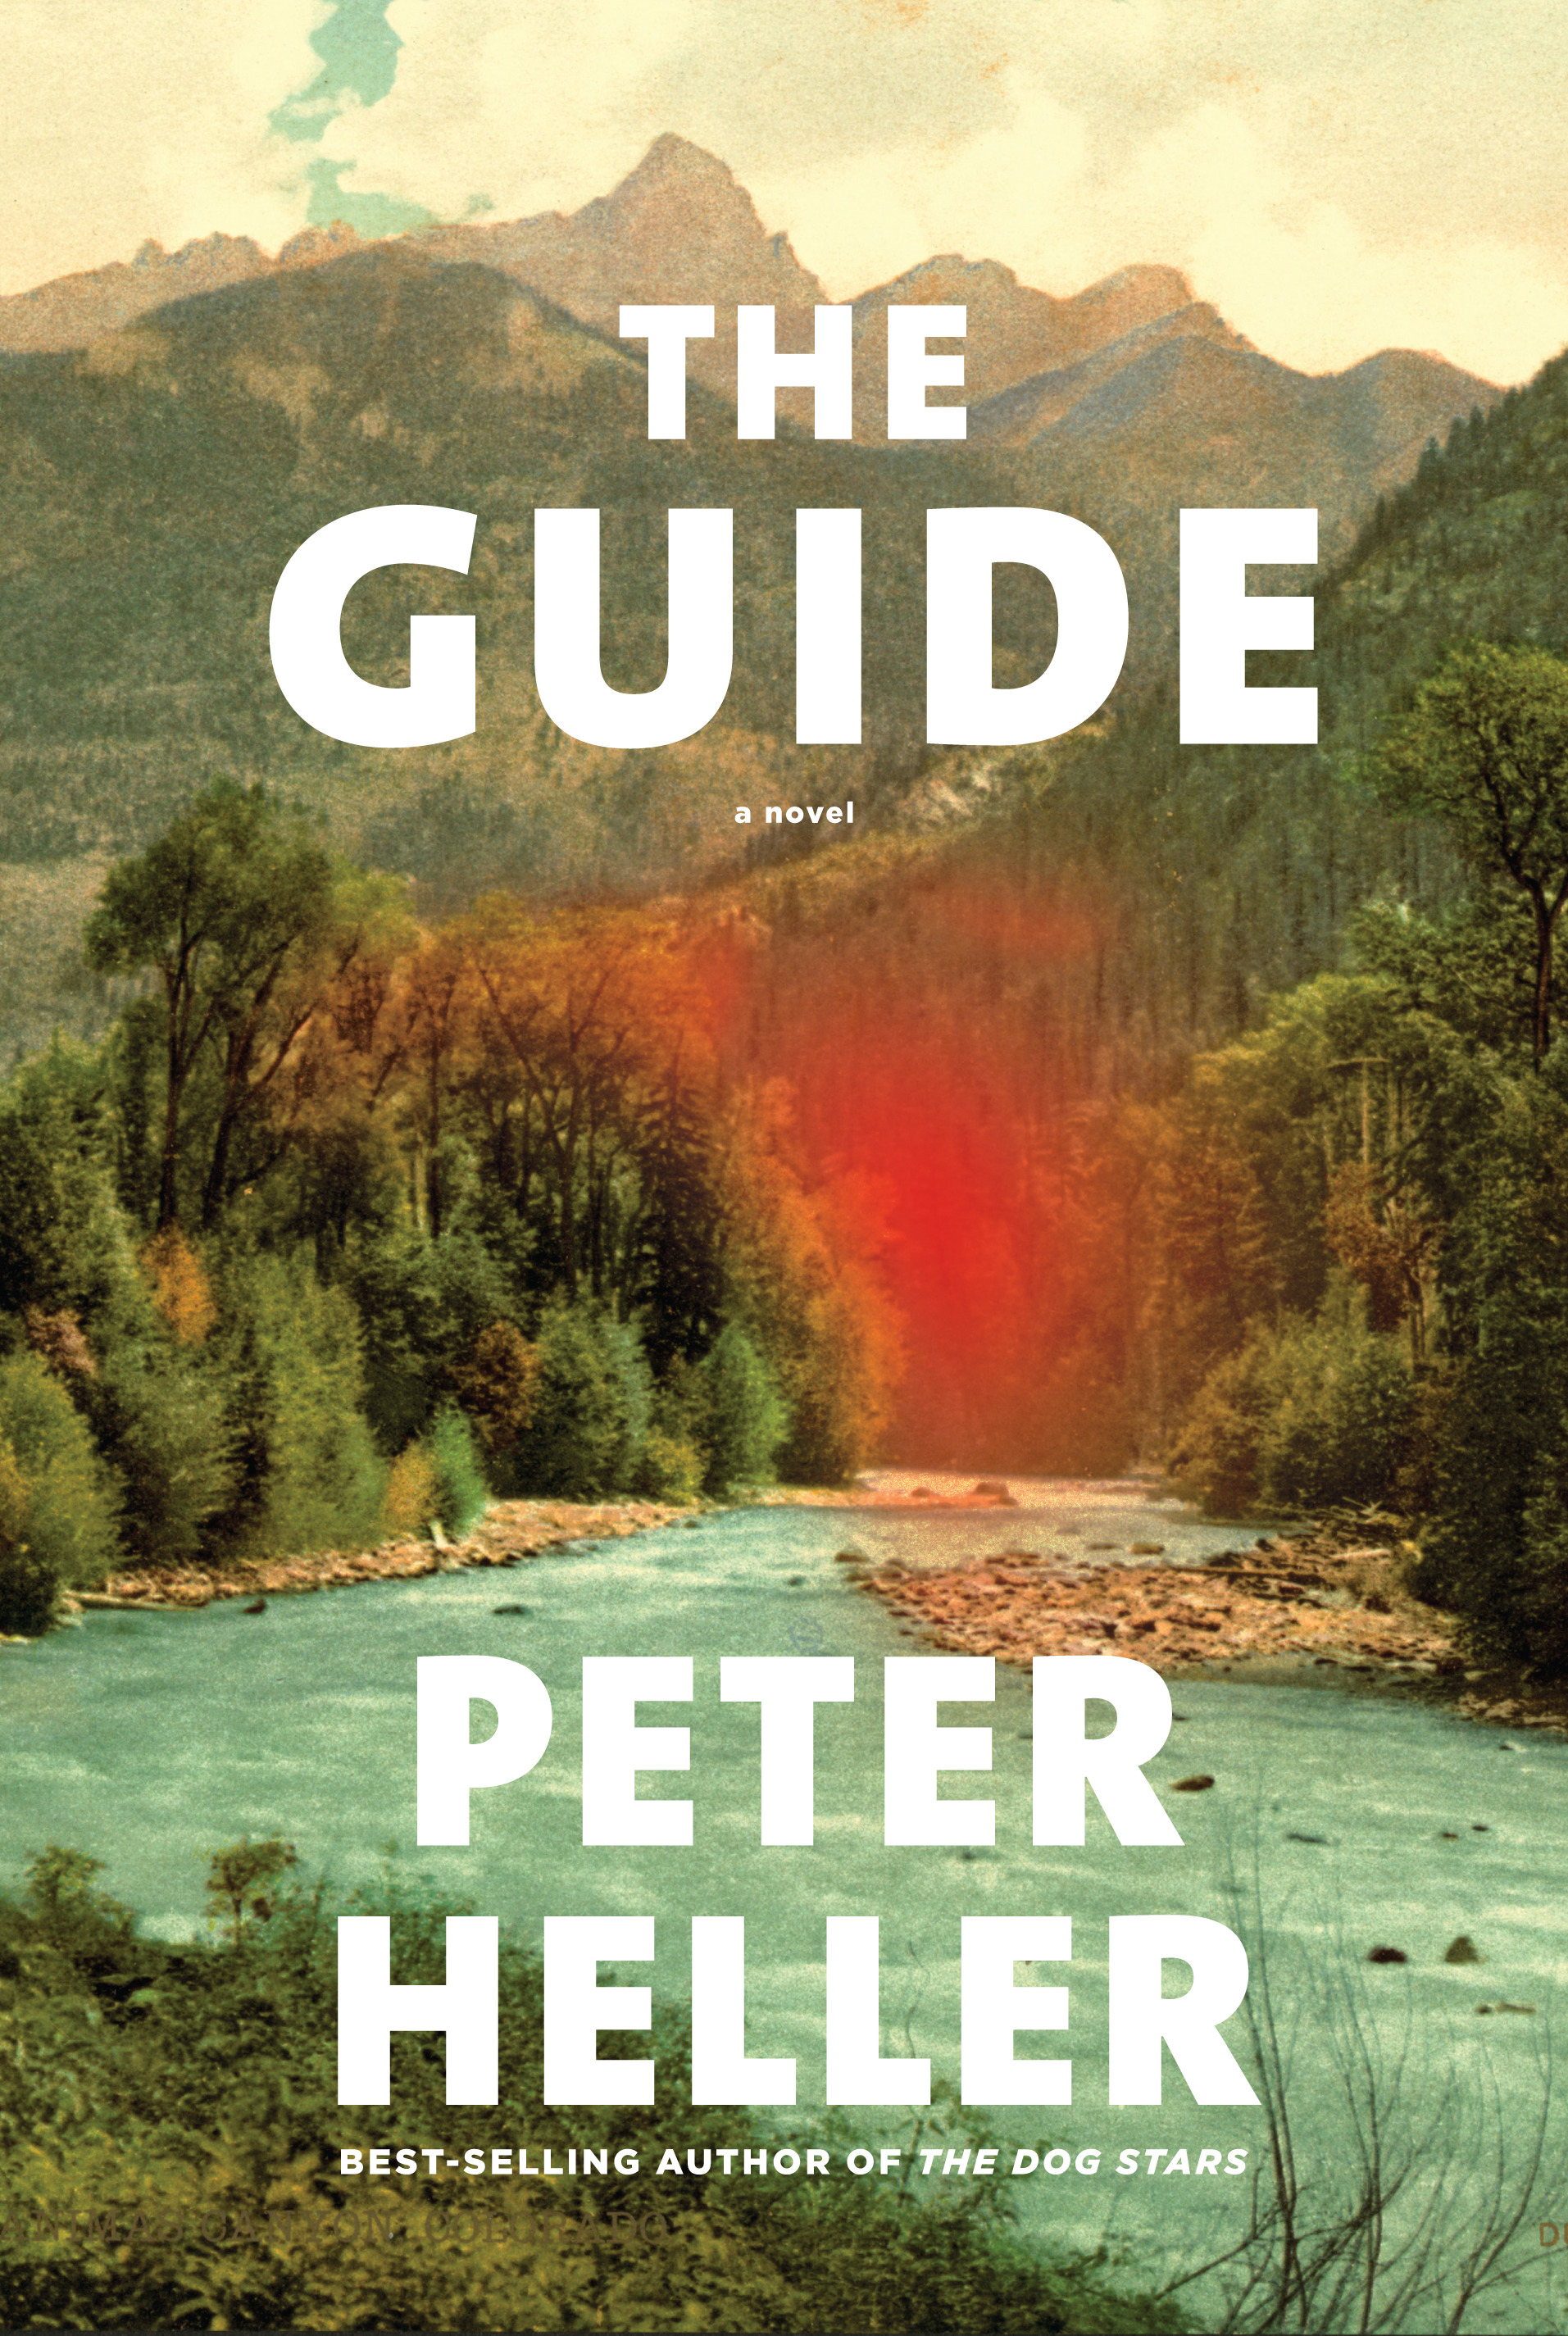 Zascha Fox, 303 Magazine, Peter Heller, Author, Novelist, Novel, Book, Writer, The Guide, The River, The Ranger, The Dog Stars, Colorado, Missoula, Fishing, Outdoors, Fiction